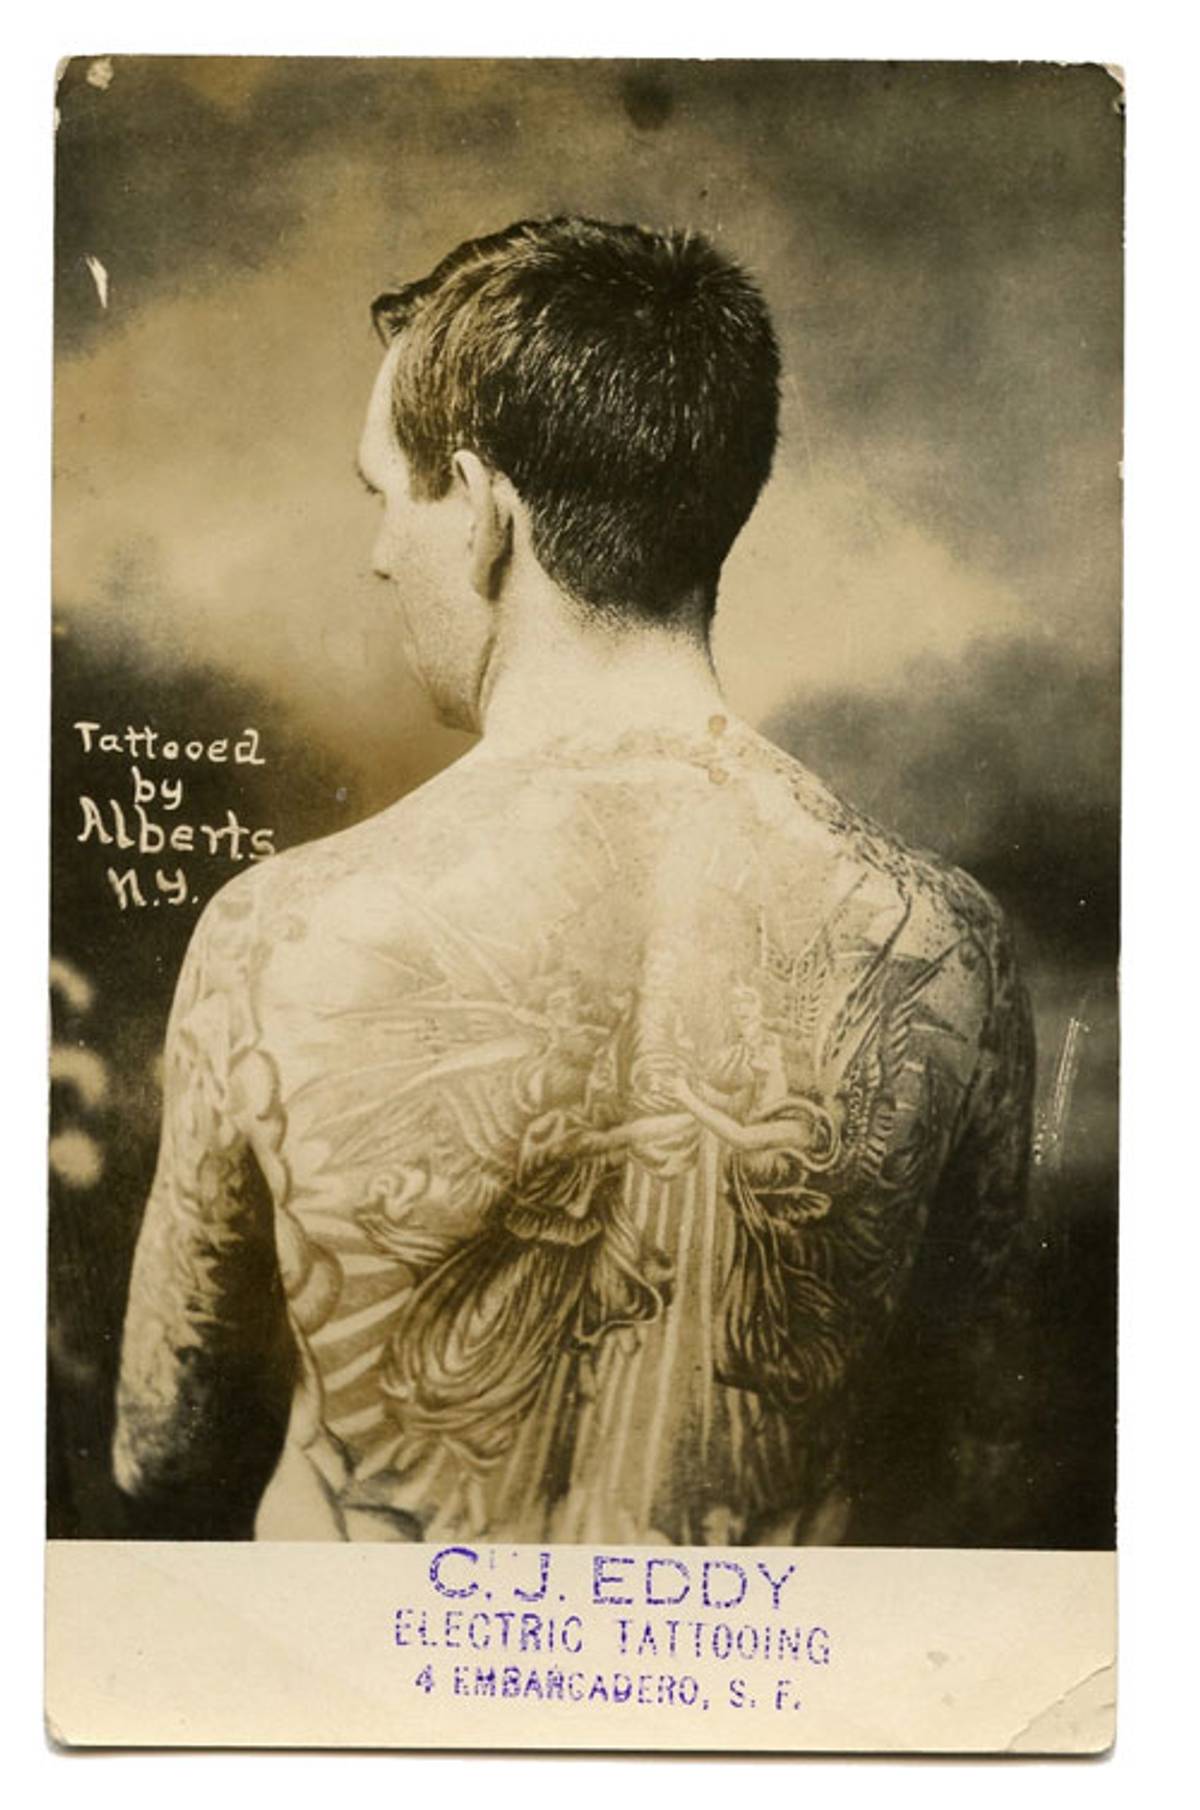 Unknown, Backpiece by ‘Lew the Jew’ Alberts on San Francisco tattooer C.J. ‘Pop’ Eddy’s promotional flyer, circa 1920. (Photo courtesy Don Ed Hardy)